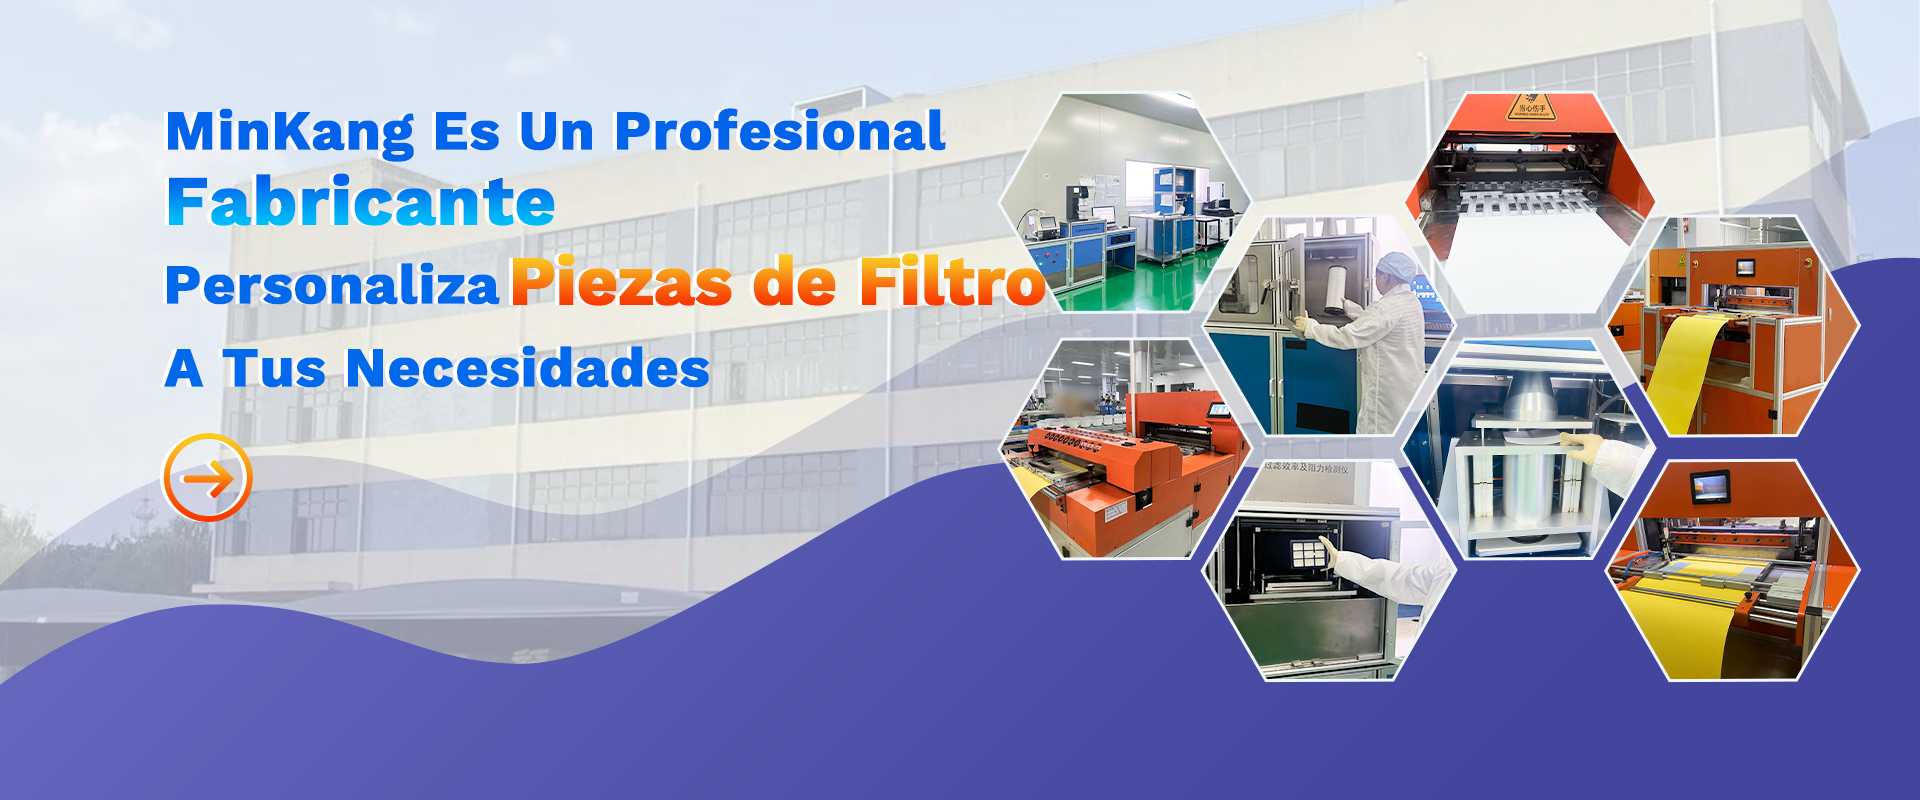 a professional filter parts manufacturer2